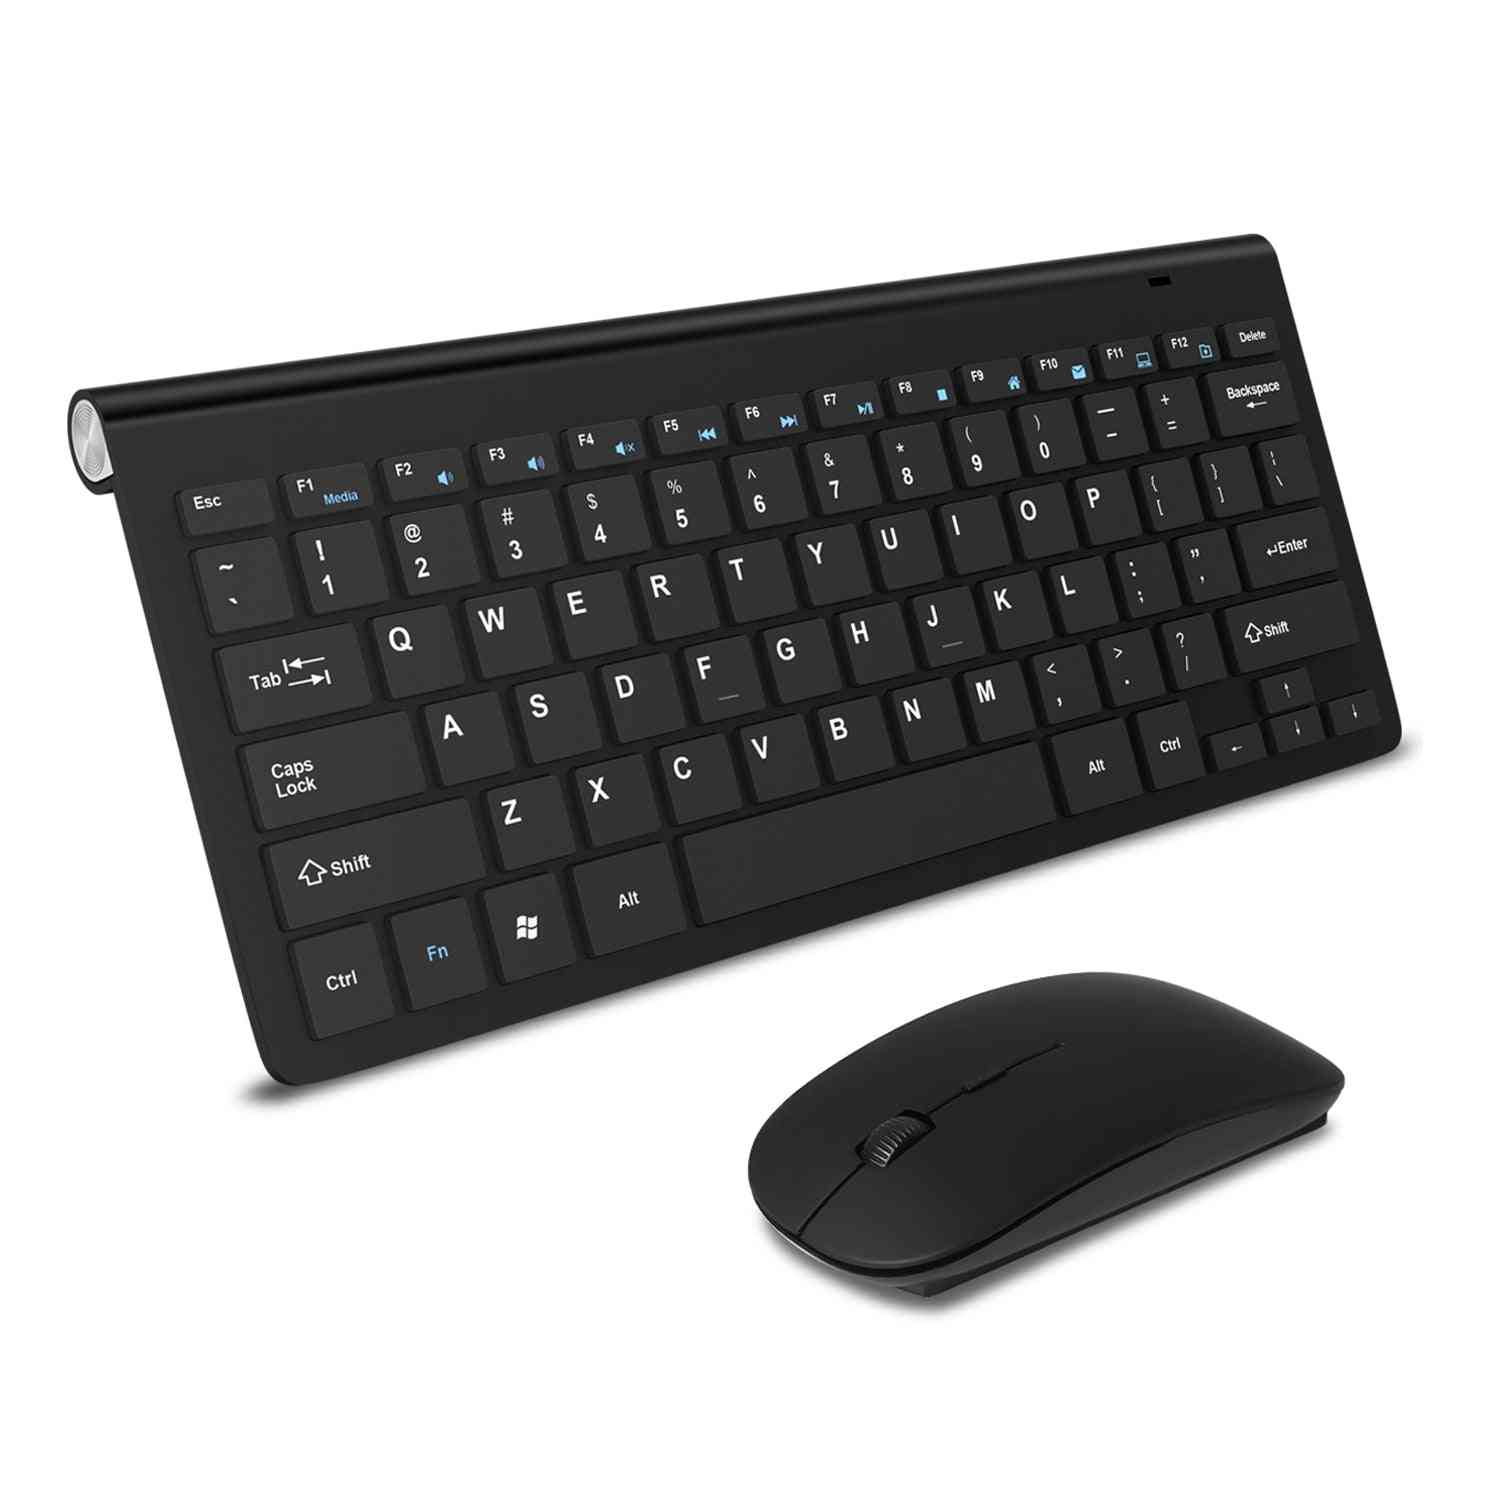 2.4g Usb Mini, Wireless Keyboard And Mouse Combo